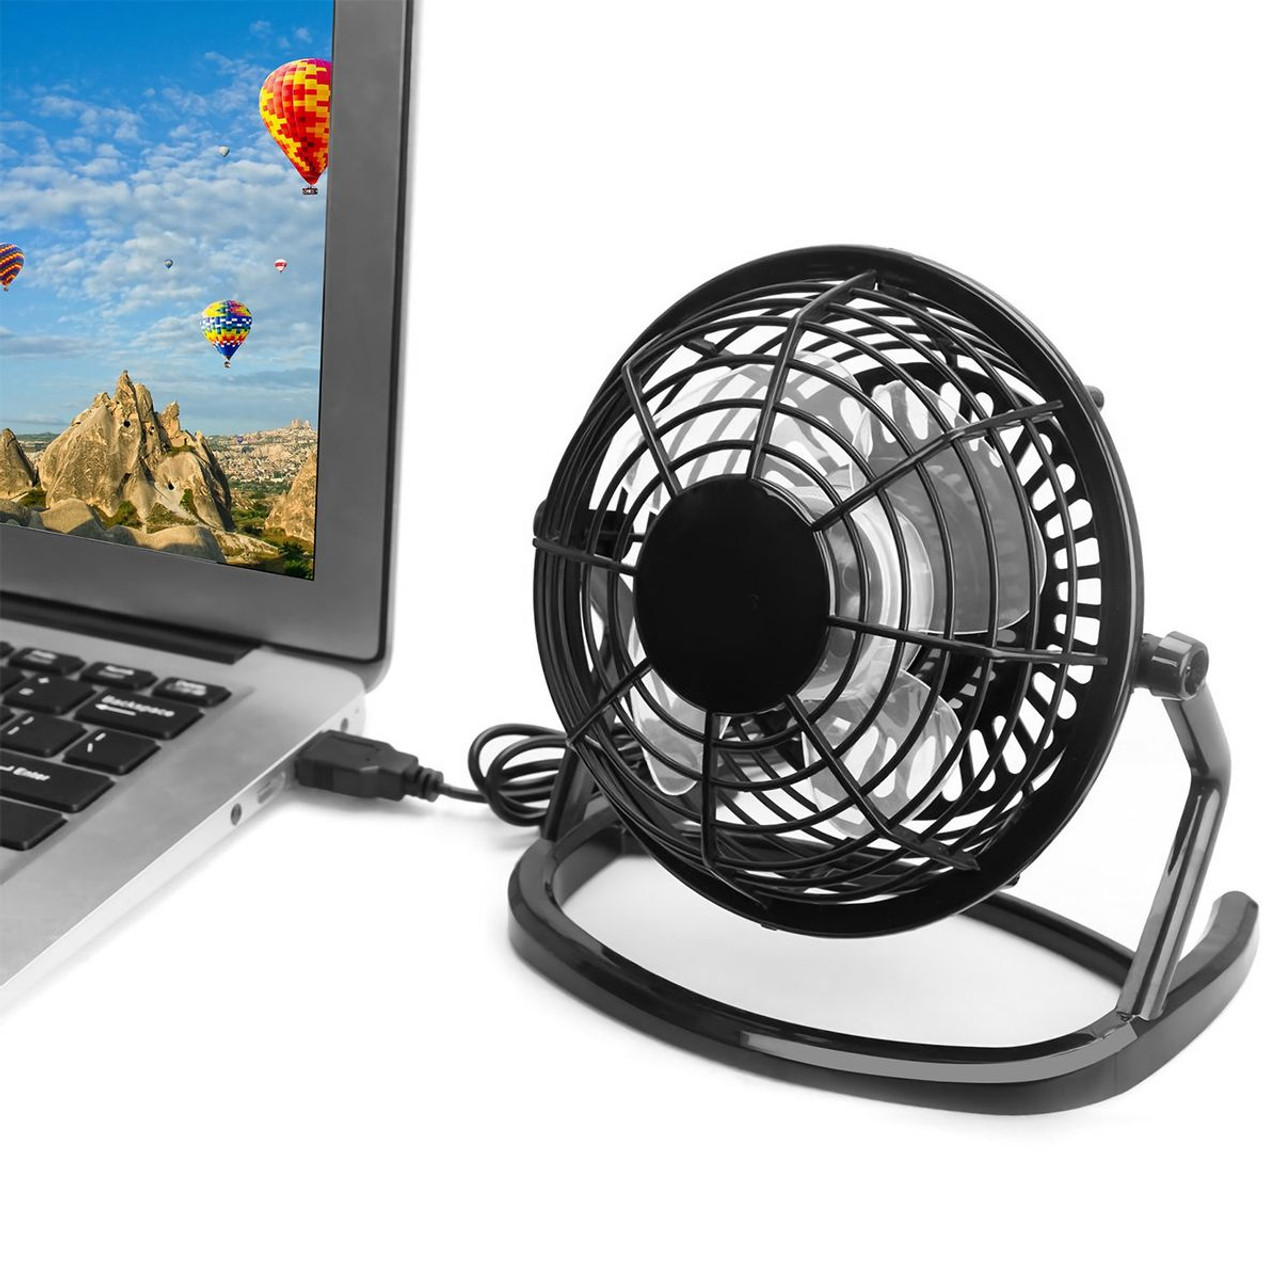 iMounTEK 360° Rotation USB Fan product image